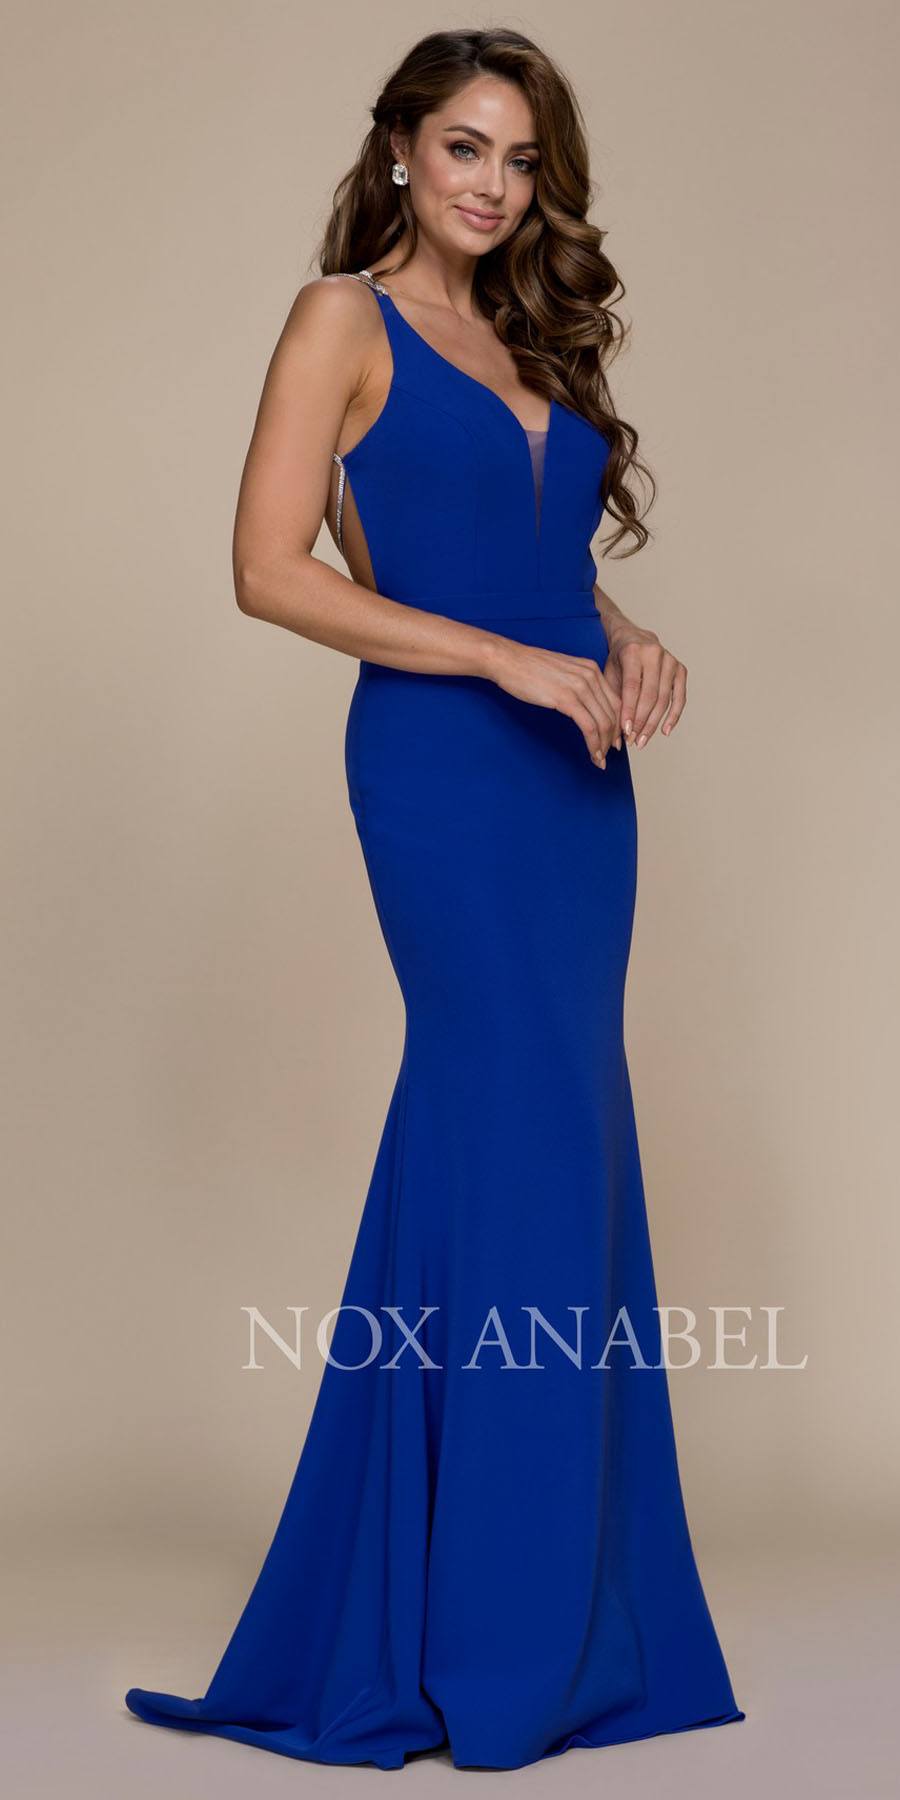 royal blue strappy dress